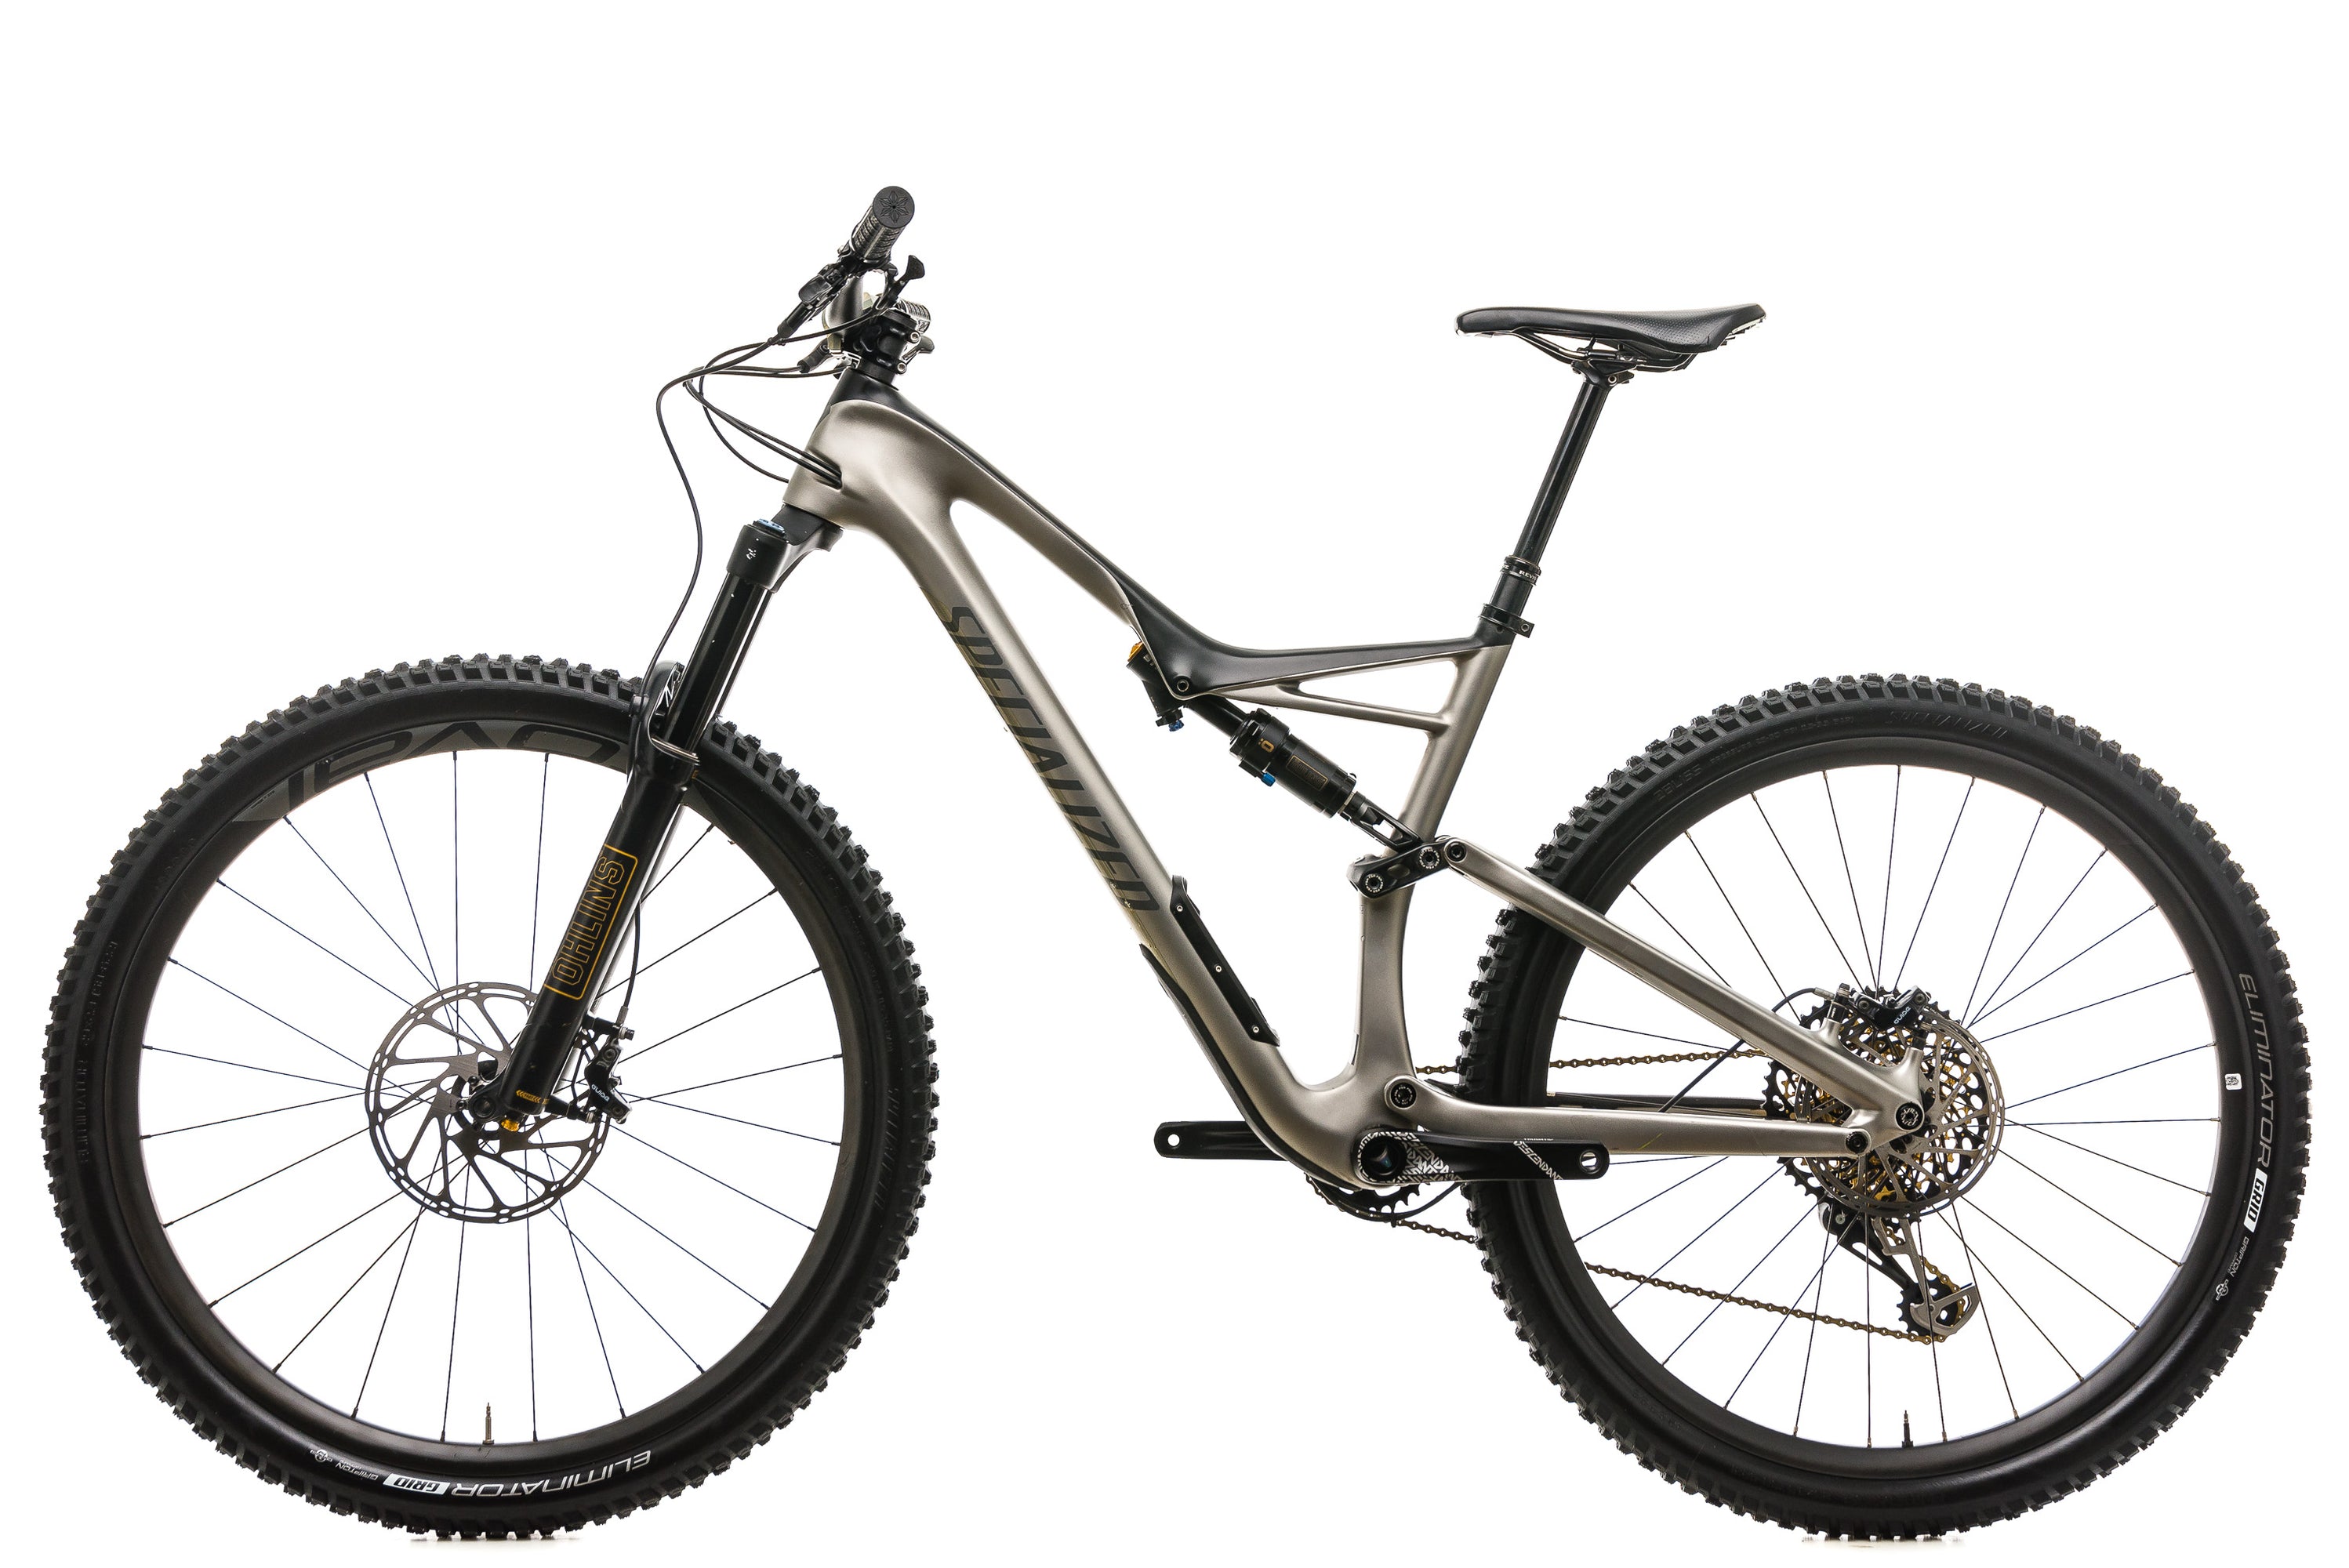 Specialized Stumpjumper Pro Carbon 29 Mountain Bike - 2018, Large non-drive side